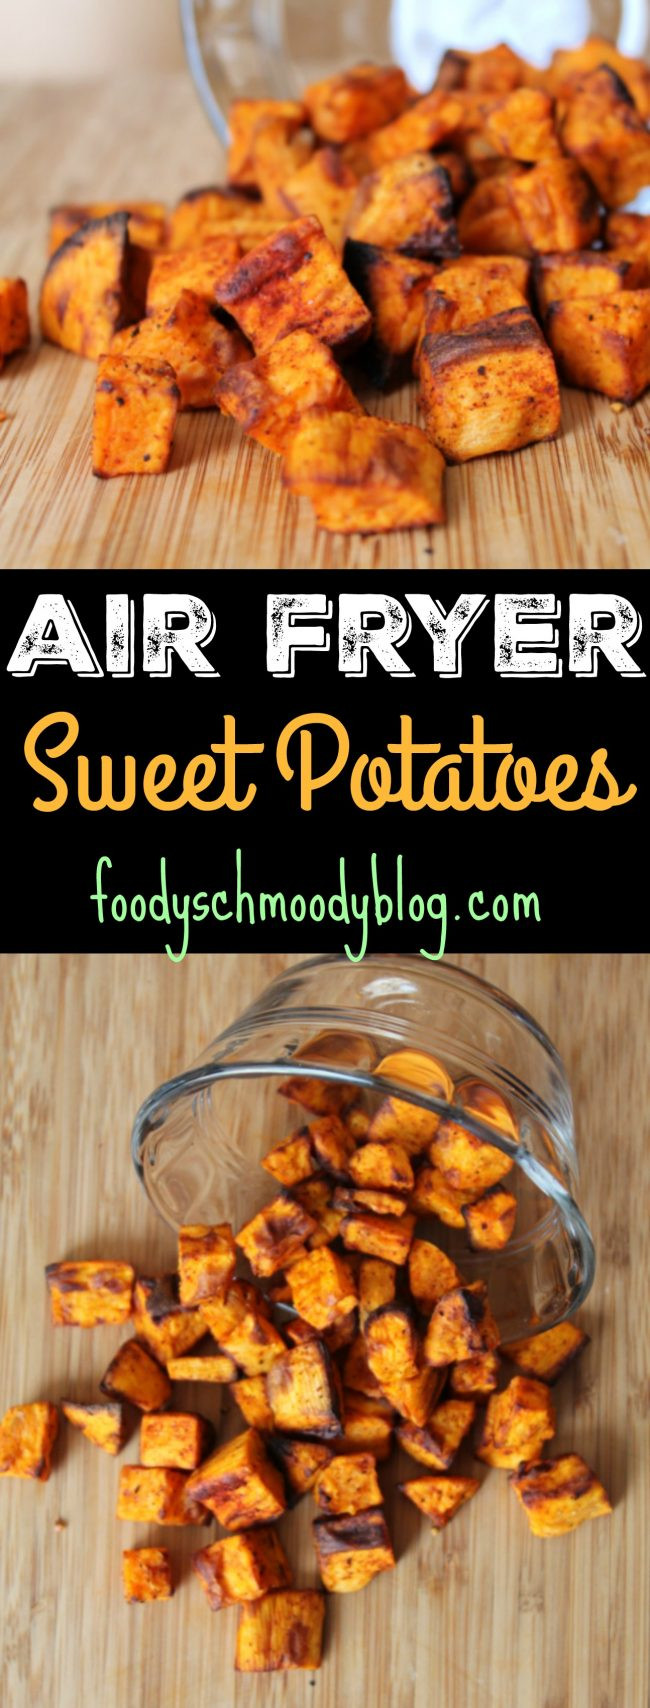 Air Fryer Sweet Potato
 Air Fryer Sweet Potatoes Foody Schmoody Blog